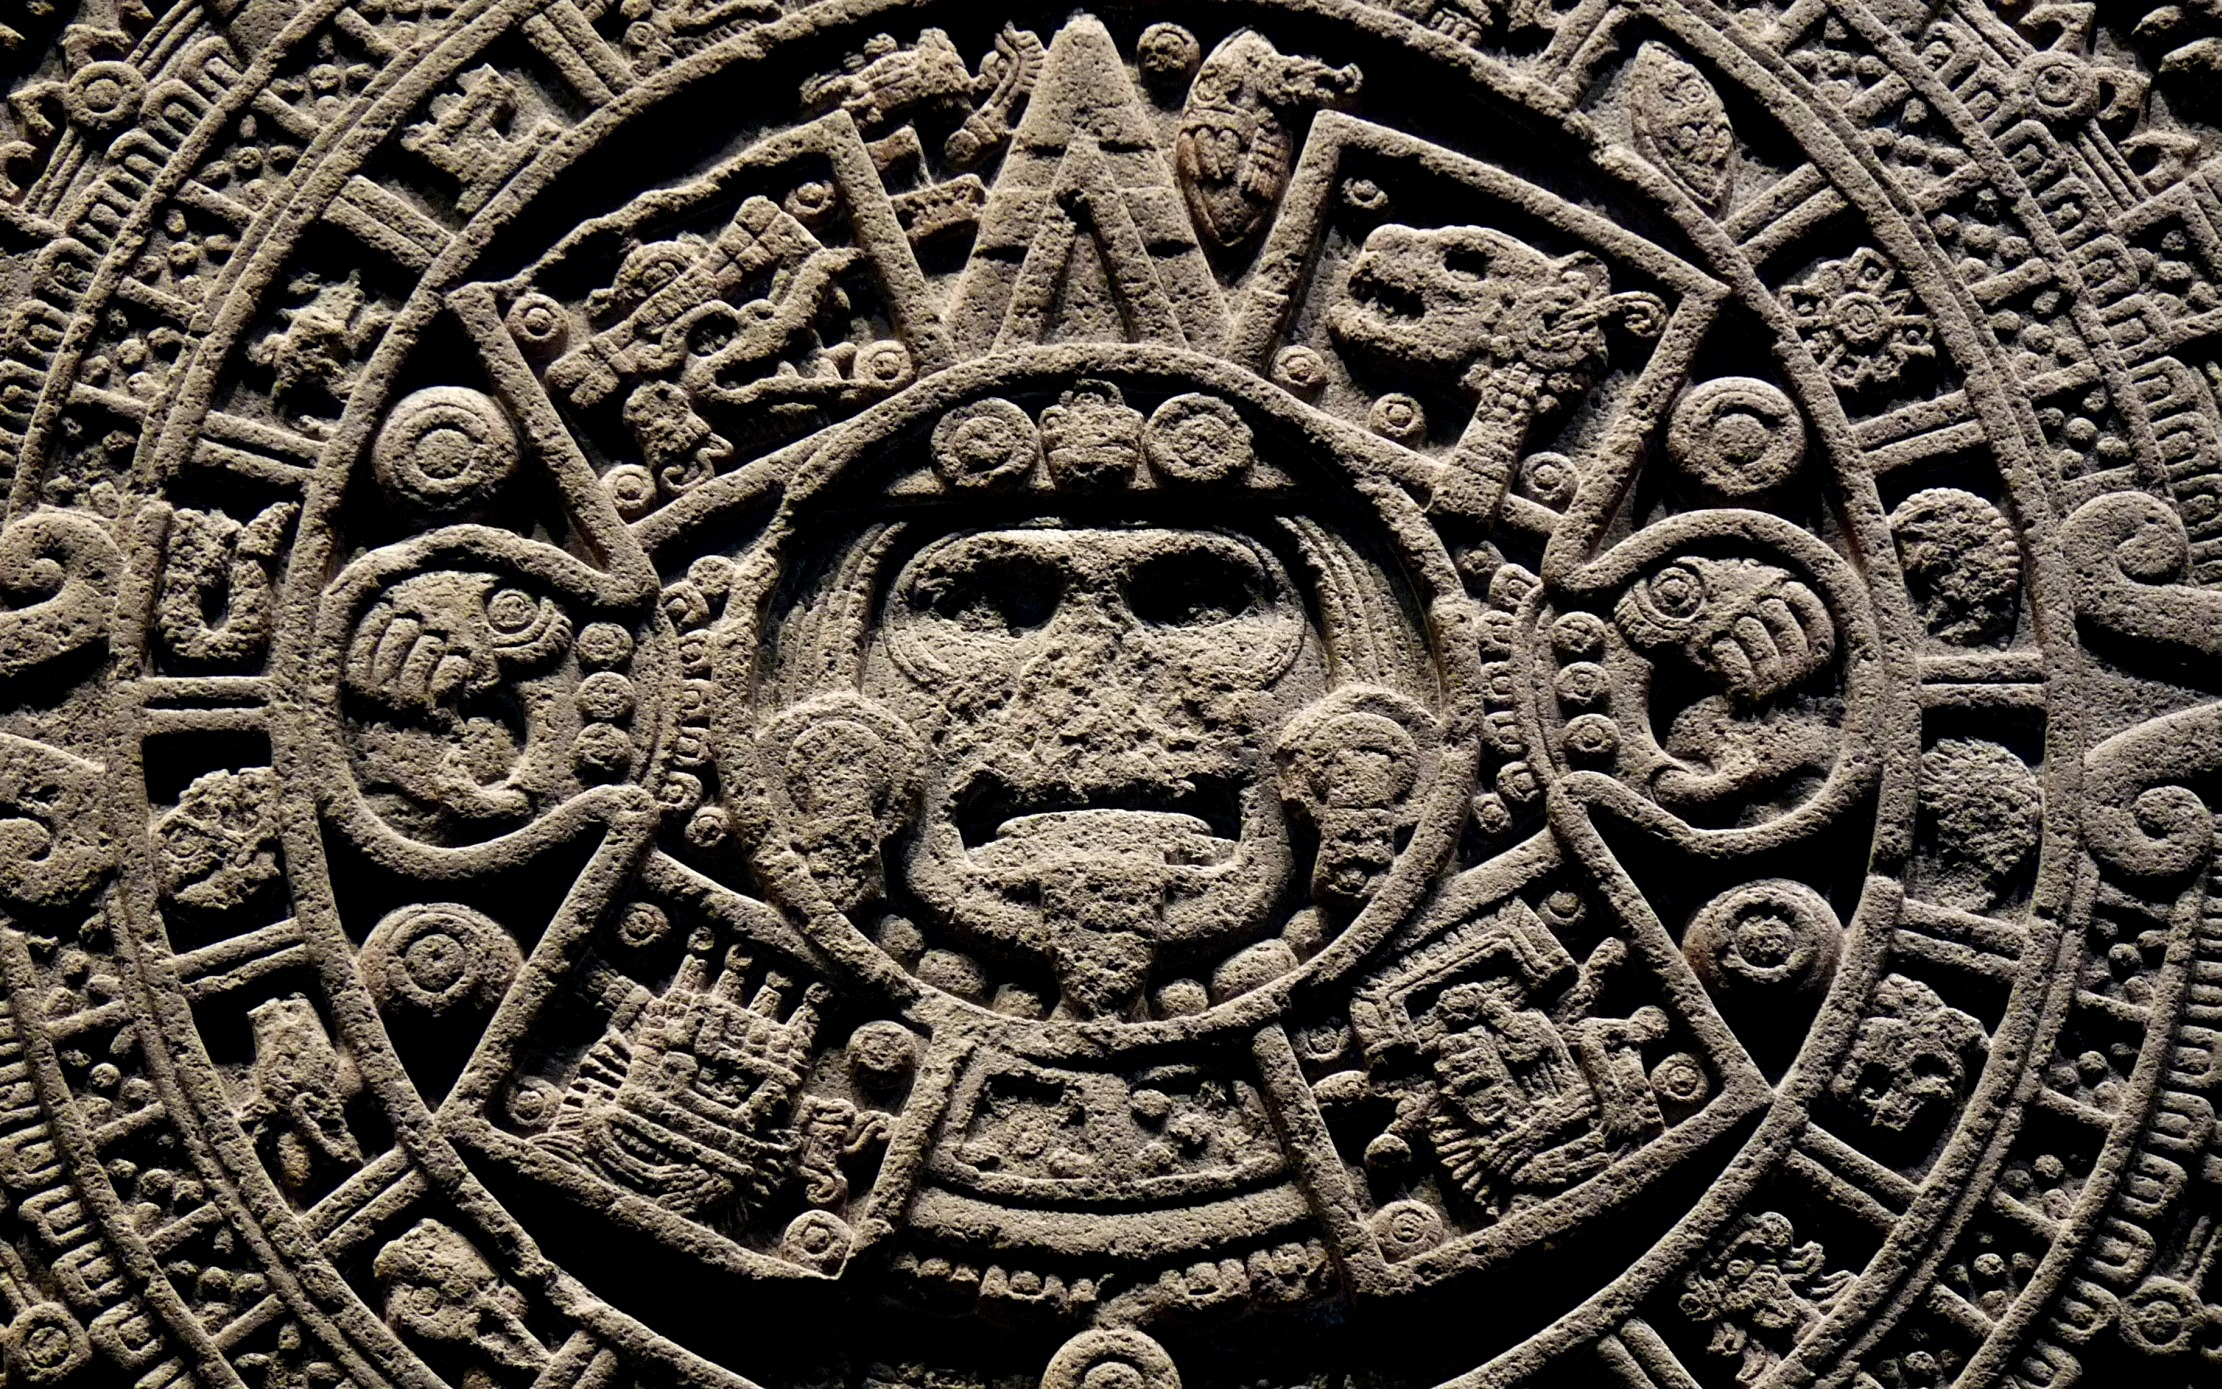 Historic aztec calendar stone